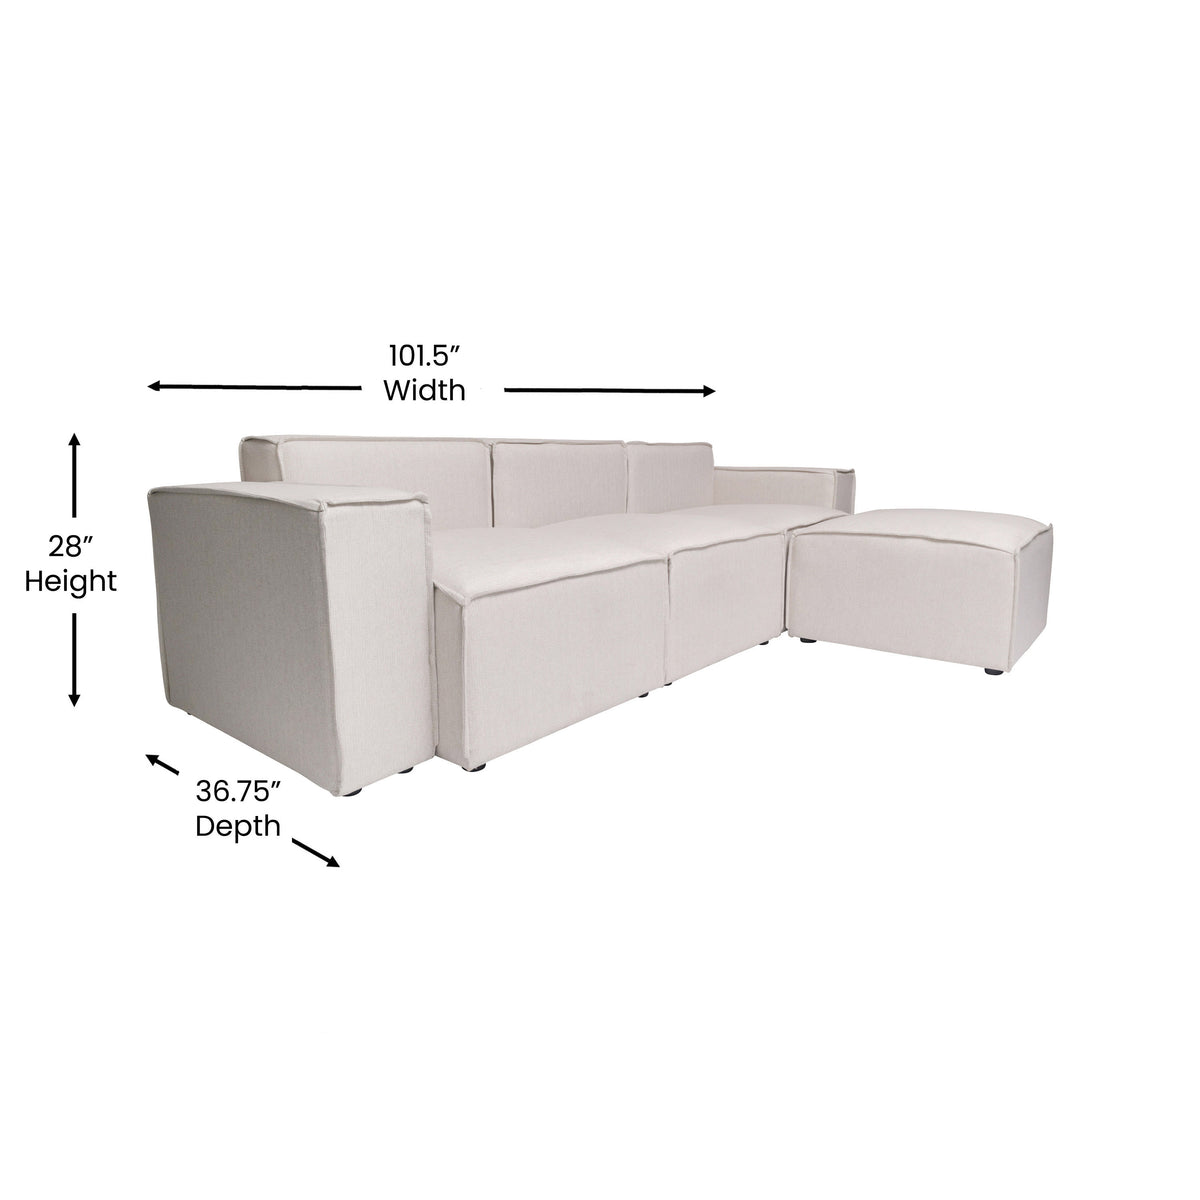 Cream |#| Contemporary 4 Piece Modular Sectional Sofa with Ottoman in Cream Fabric